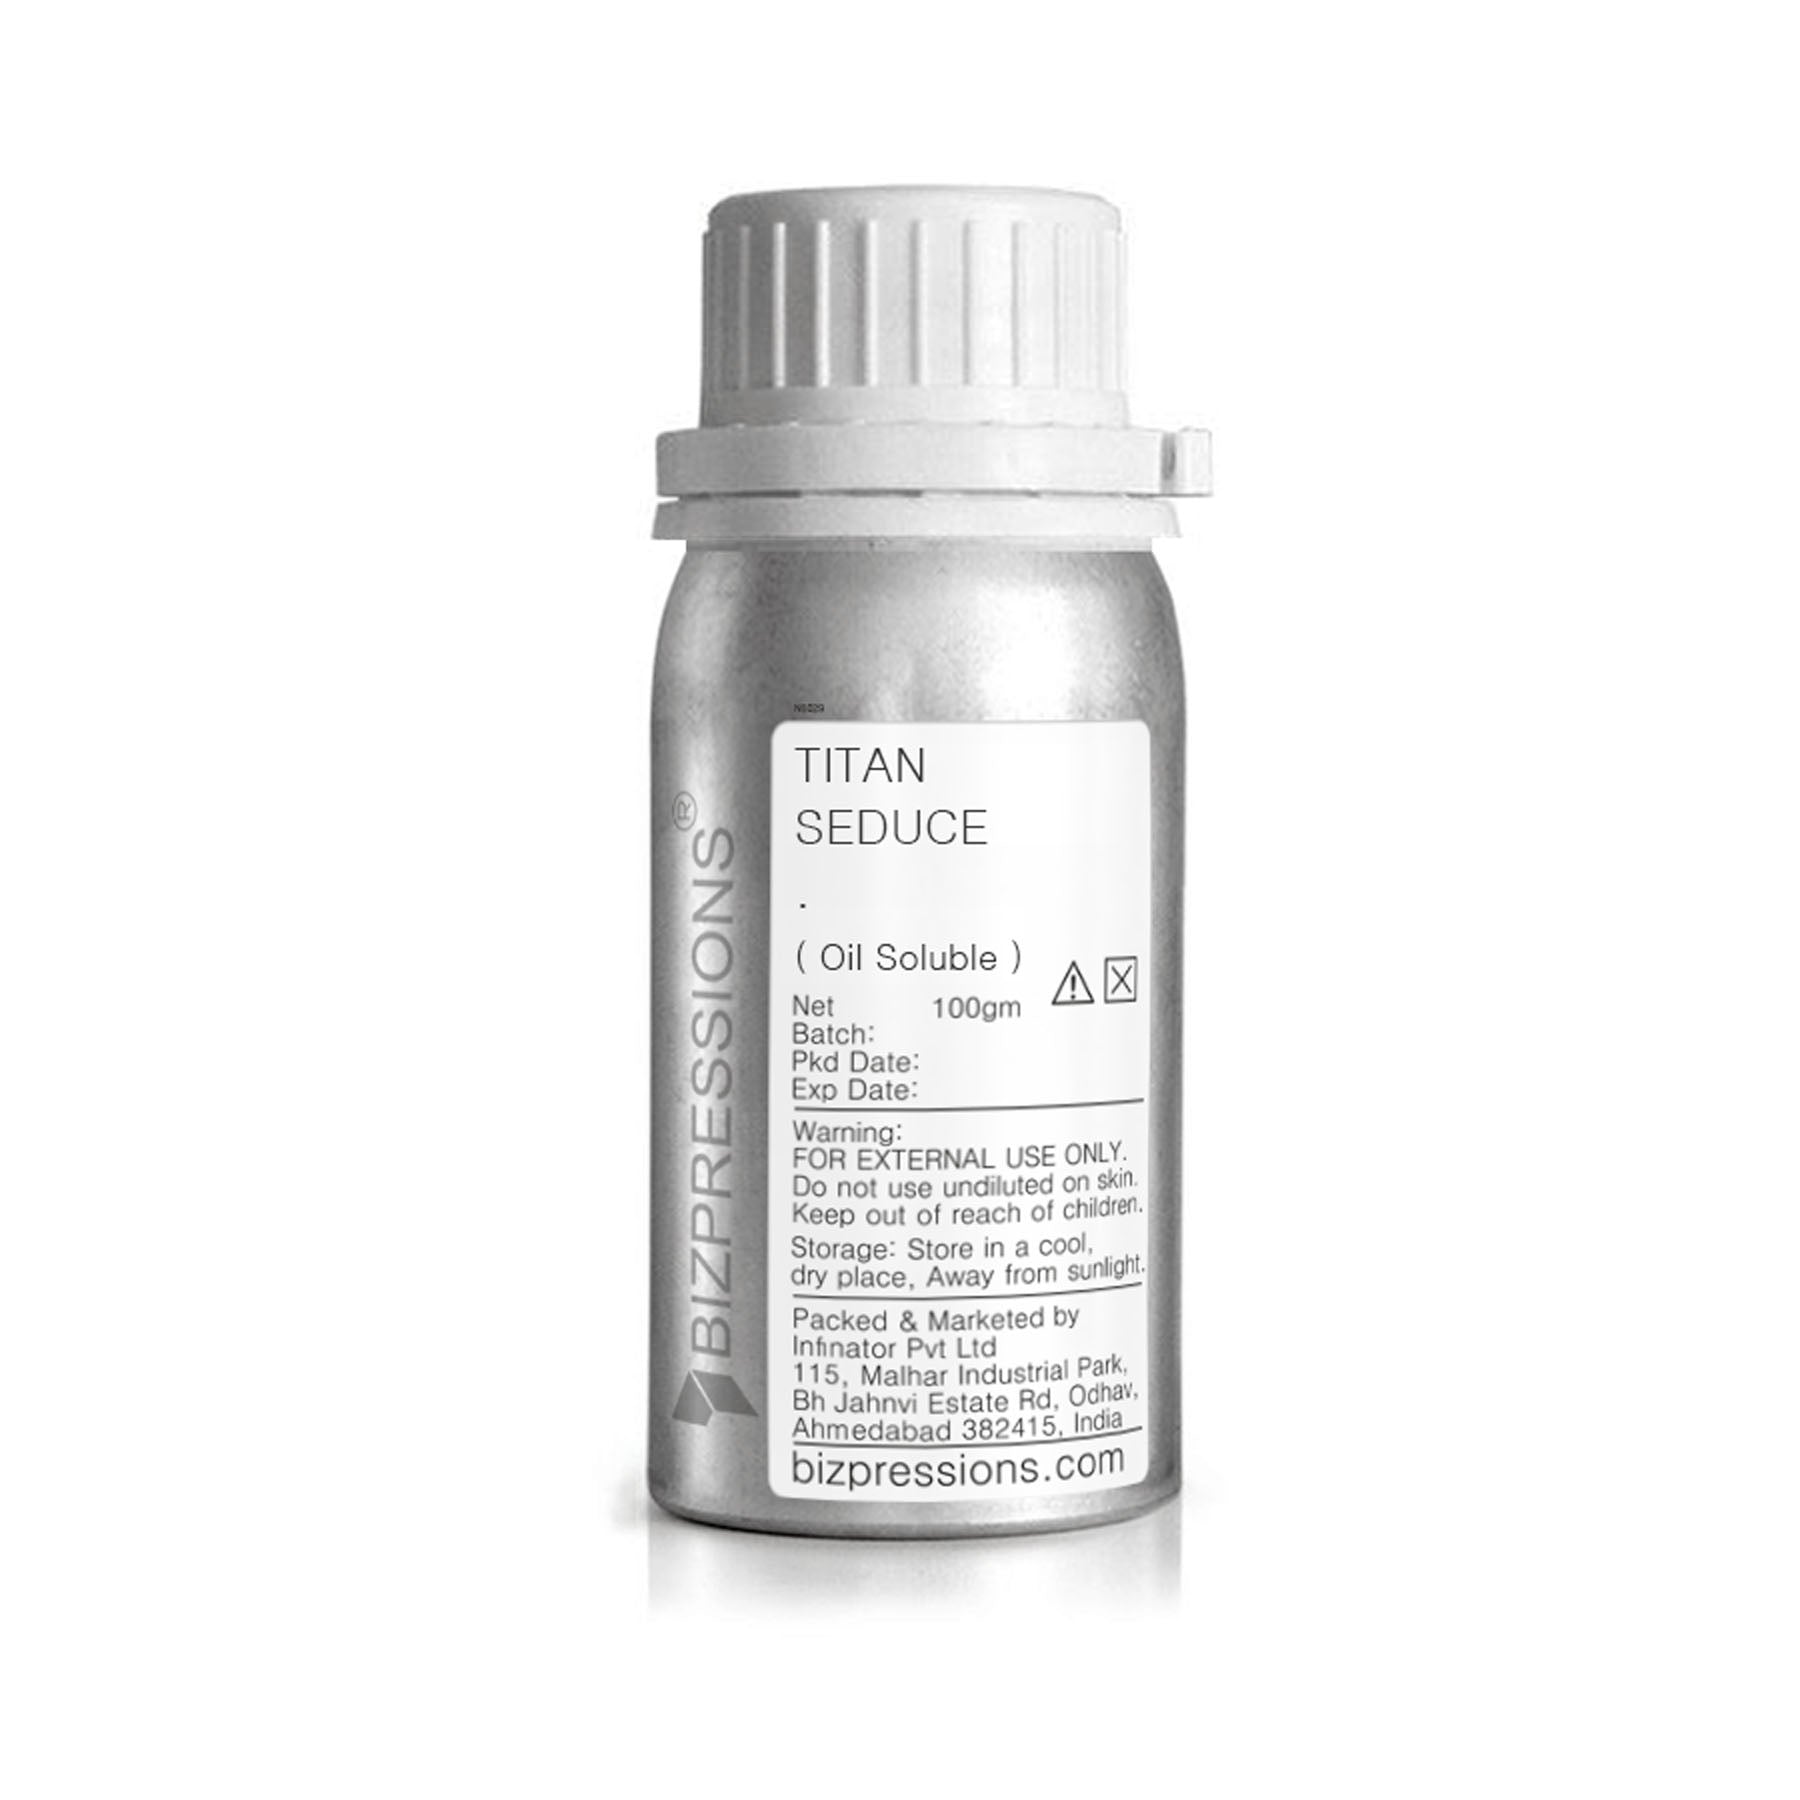 TITAN SEDUCE - Fragrance ( Oil Soluble ) - 100 gm